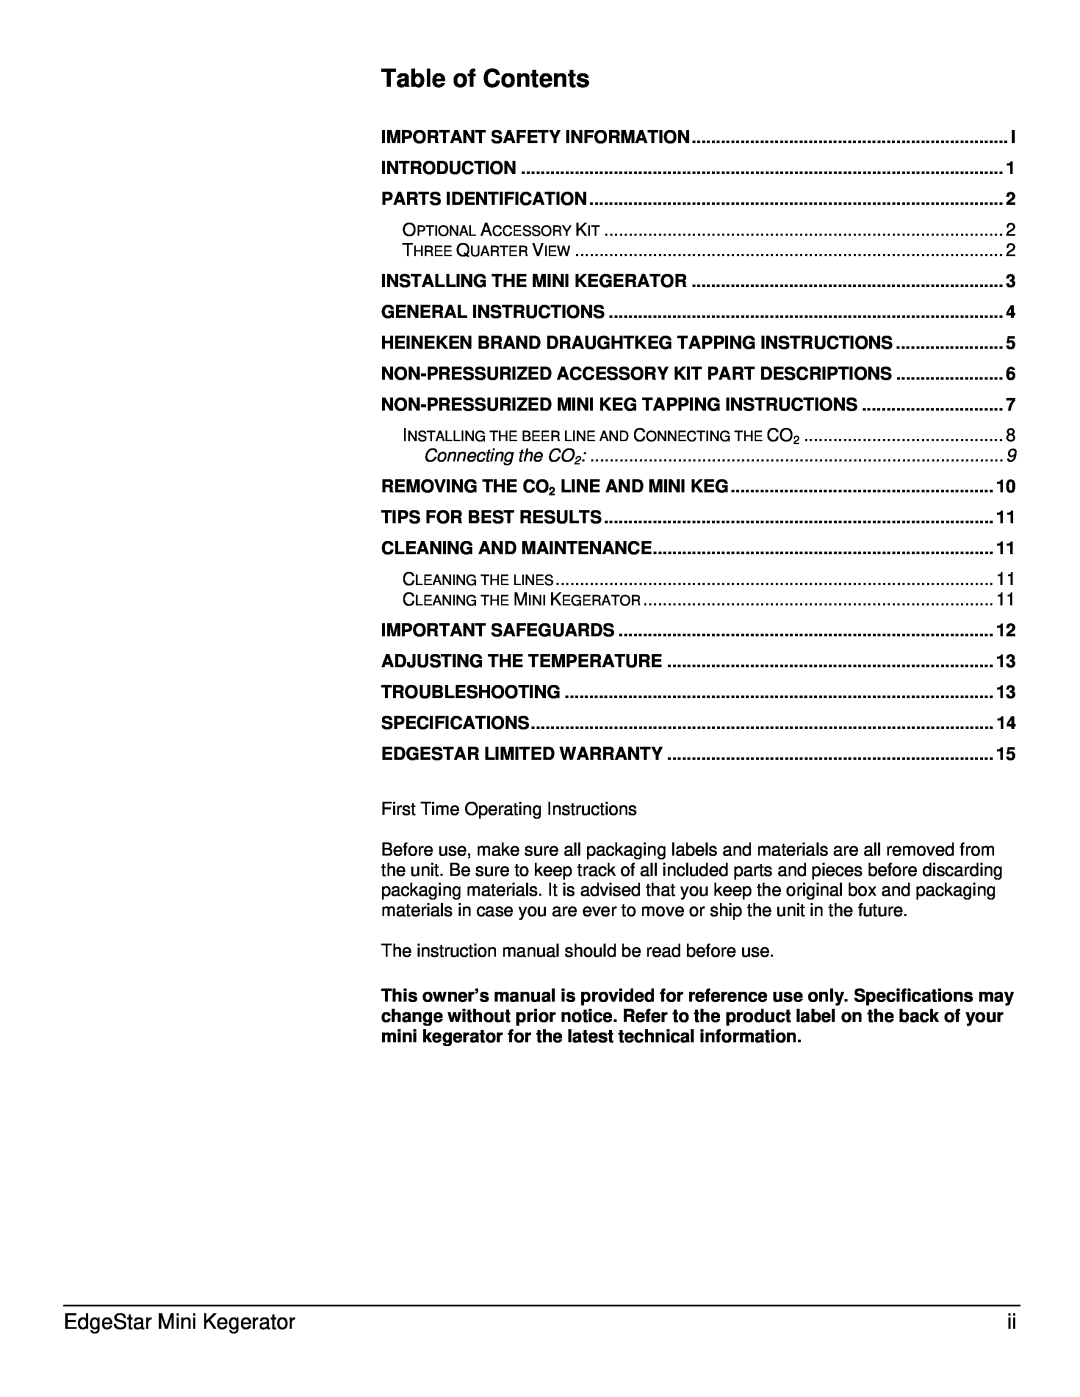 EdgeStar TBC50S owner manual Table of Contents, EdgeStar Mini Kegerator, Heineken Brand Draughtkeg Tapping Instructions 